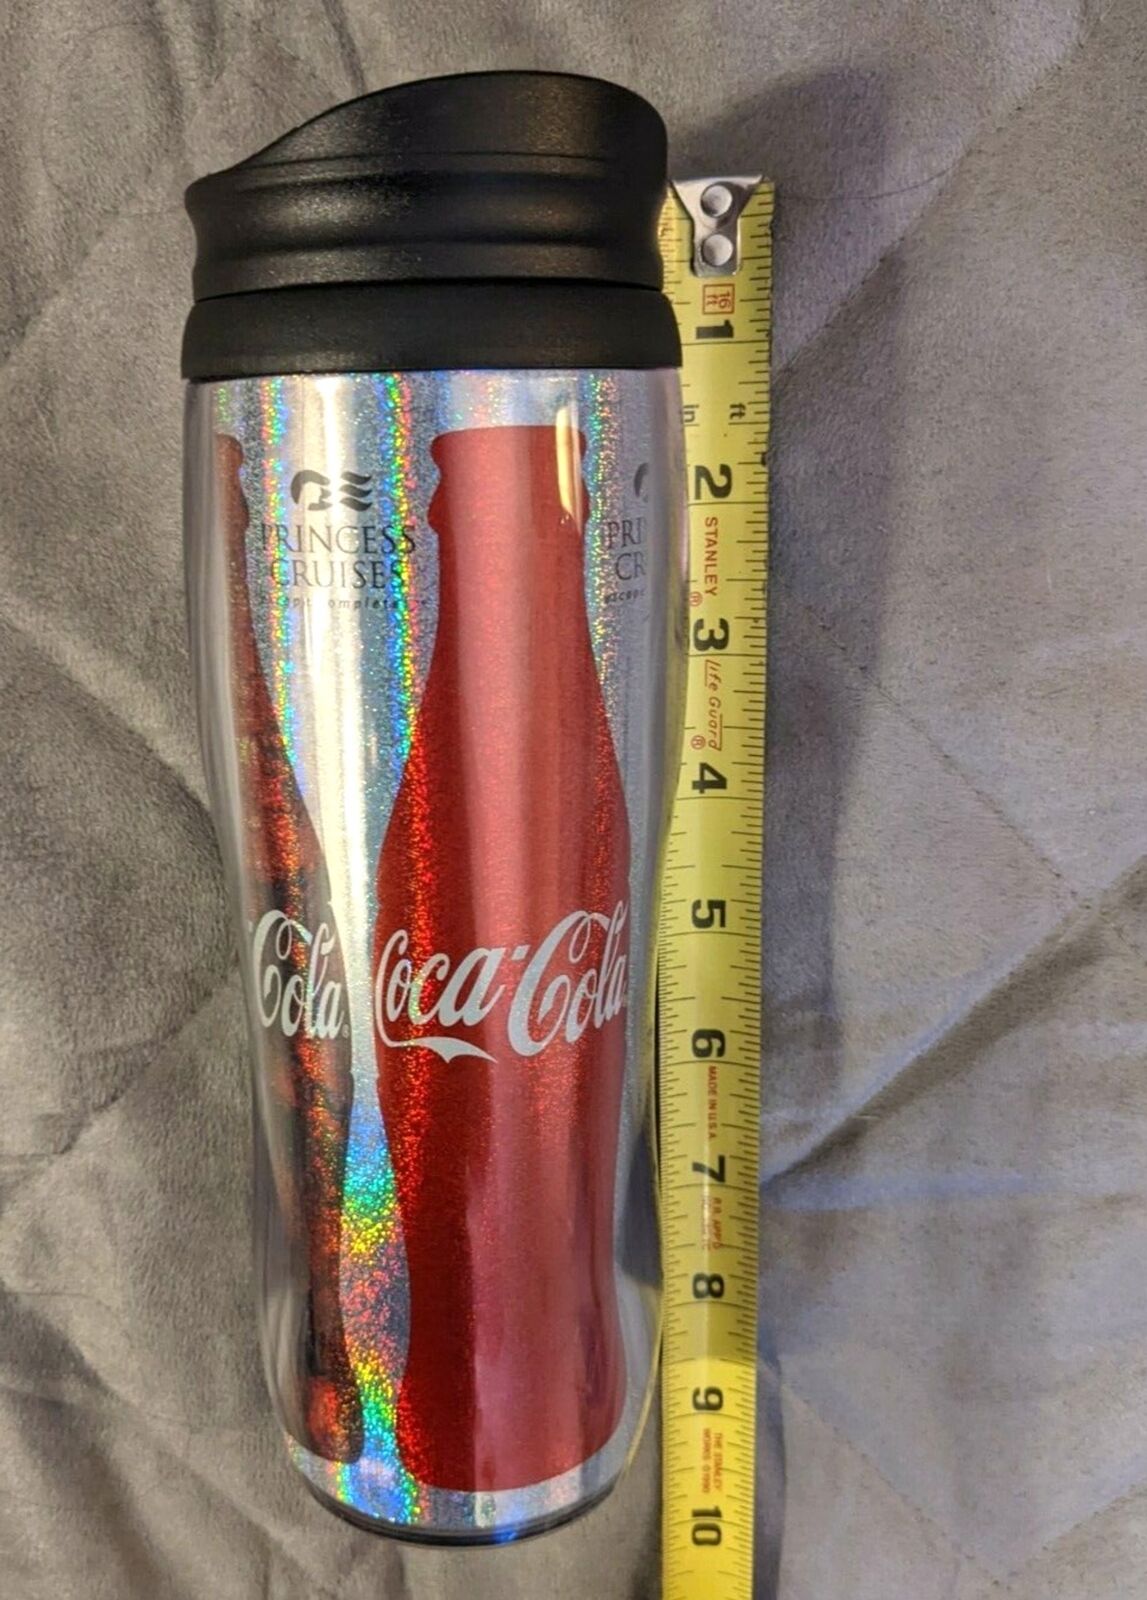 COCO-COLA reusable tumbler w/ lid slide closure princess cruise lines cup coke